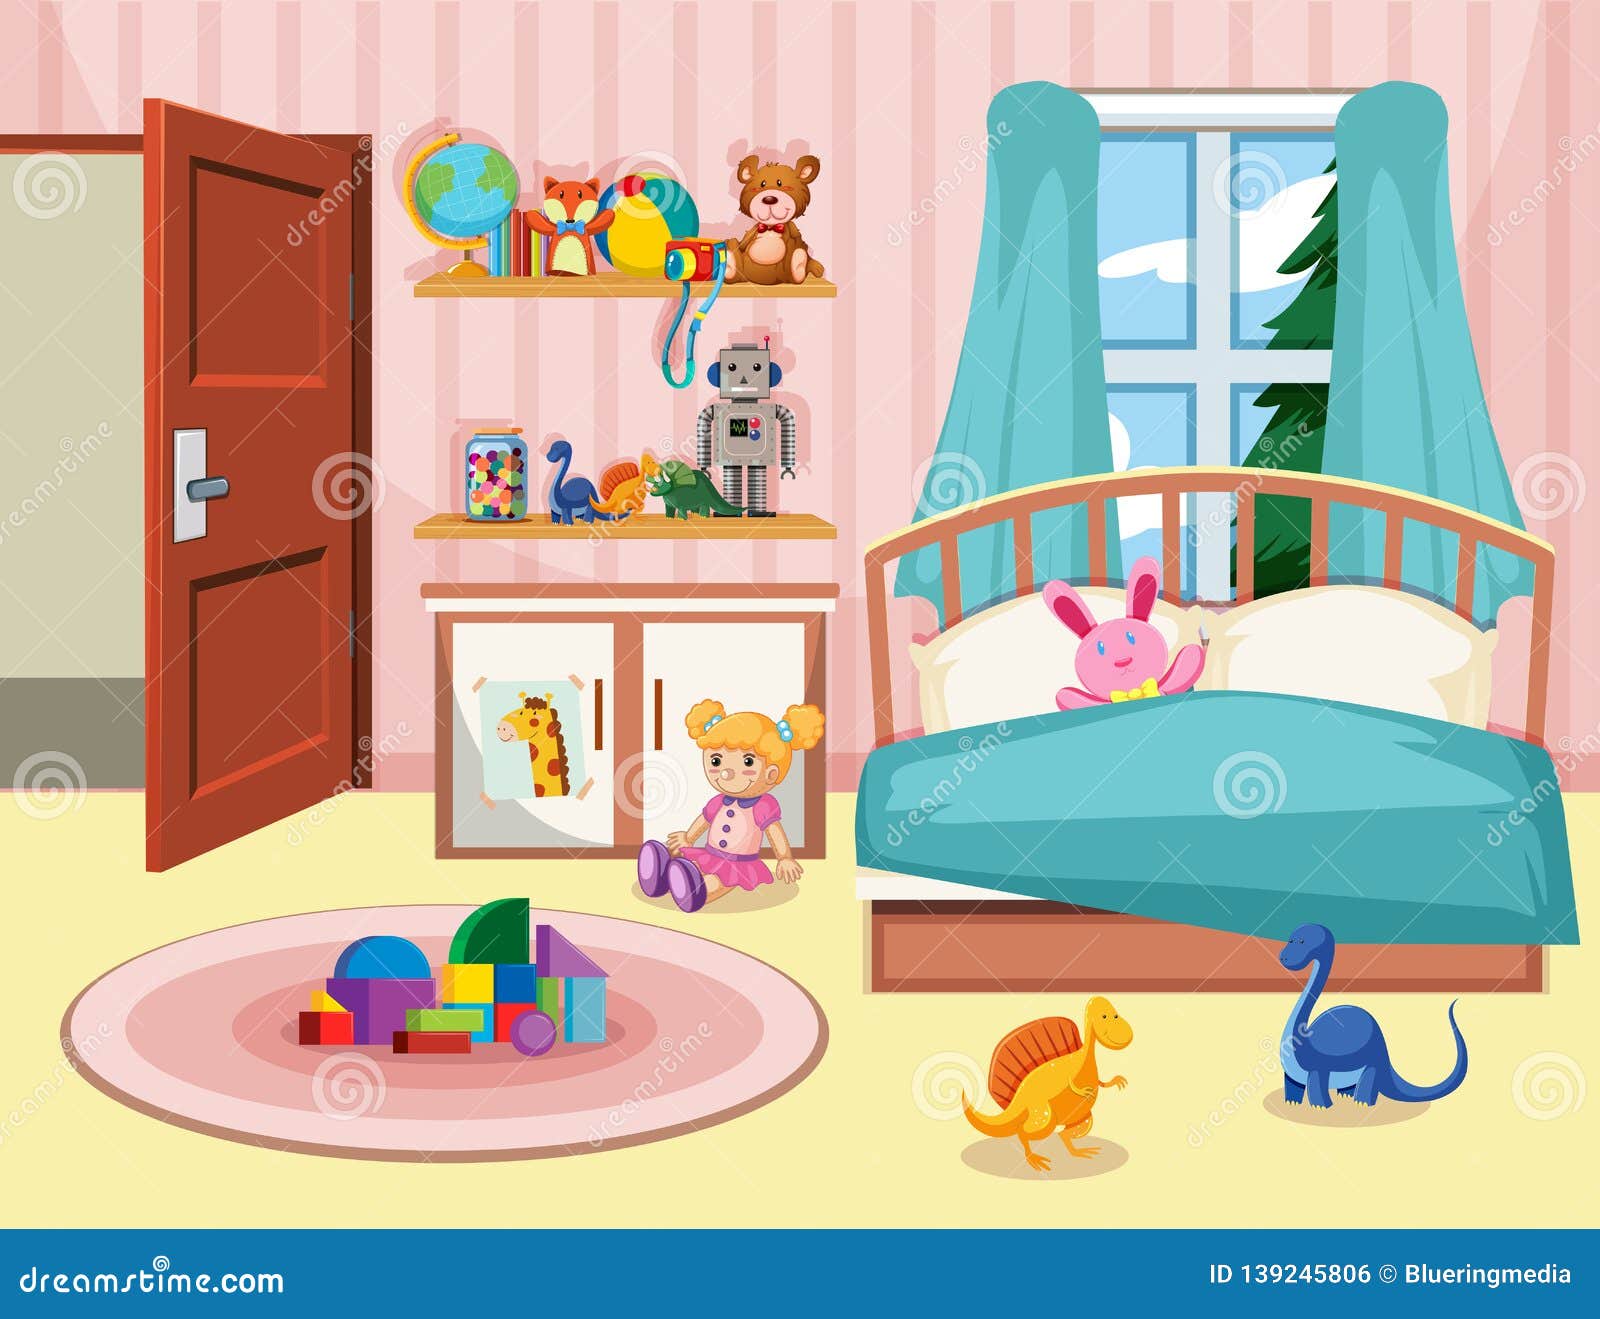 A kid bedroom background stock vector. Illustration of robot - 139245806